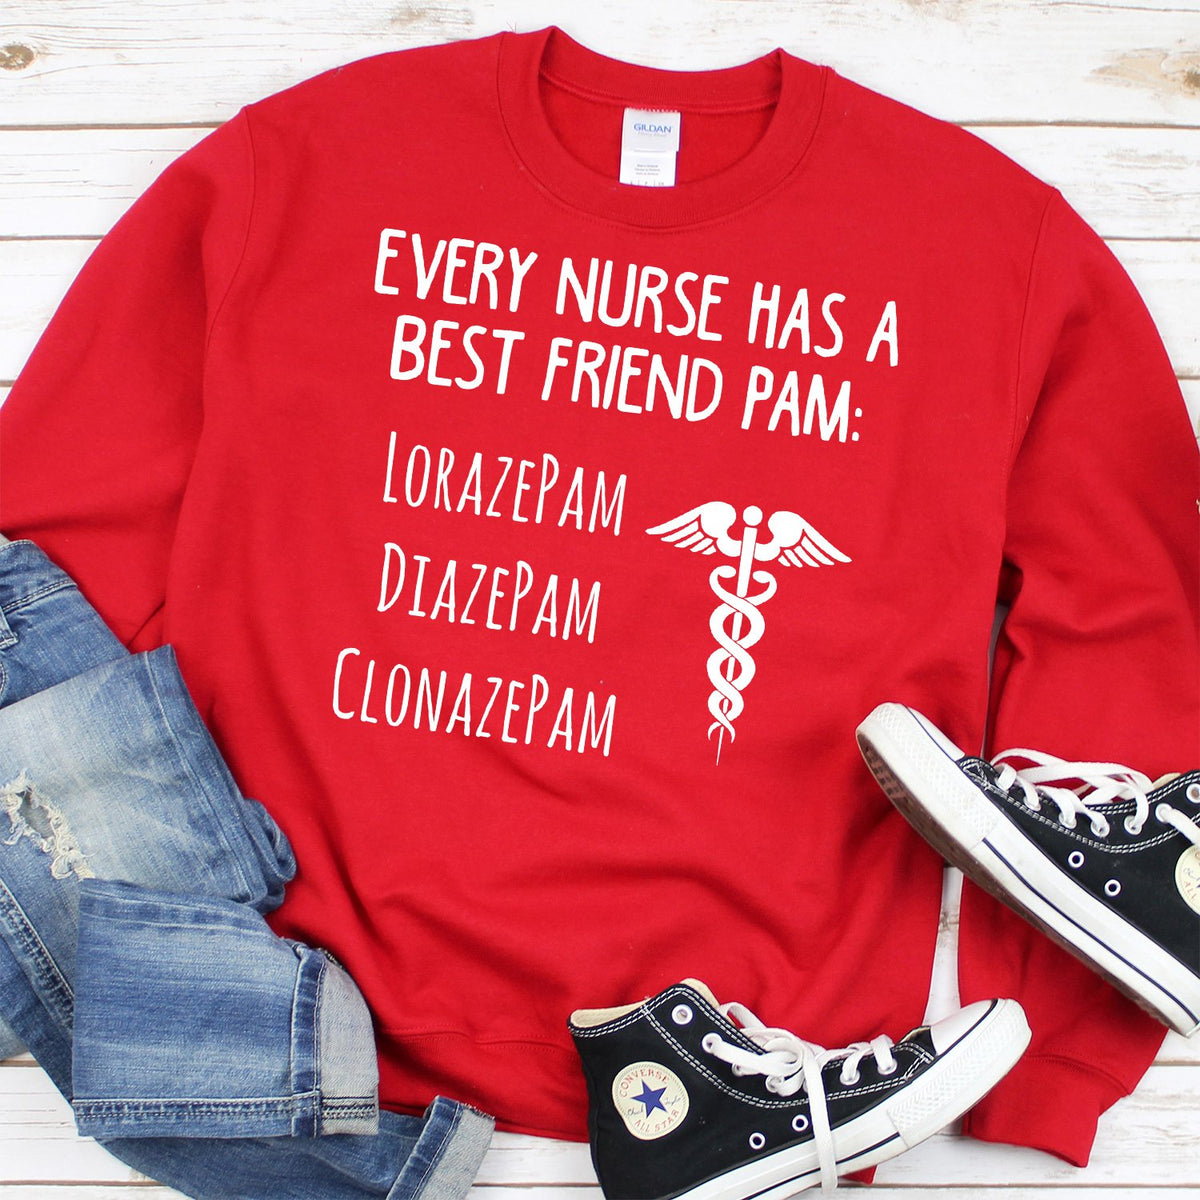 Every Nurse Has A Best Friend Pam - Long Sleeve Heavy Crewneck Sweatshirt